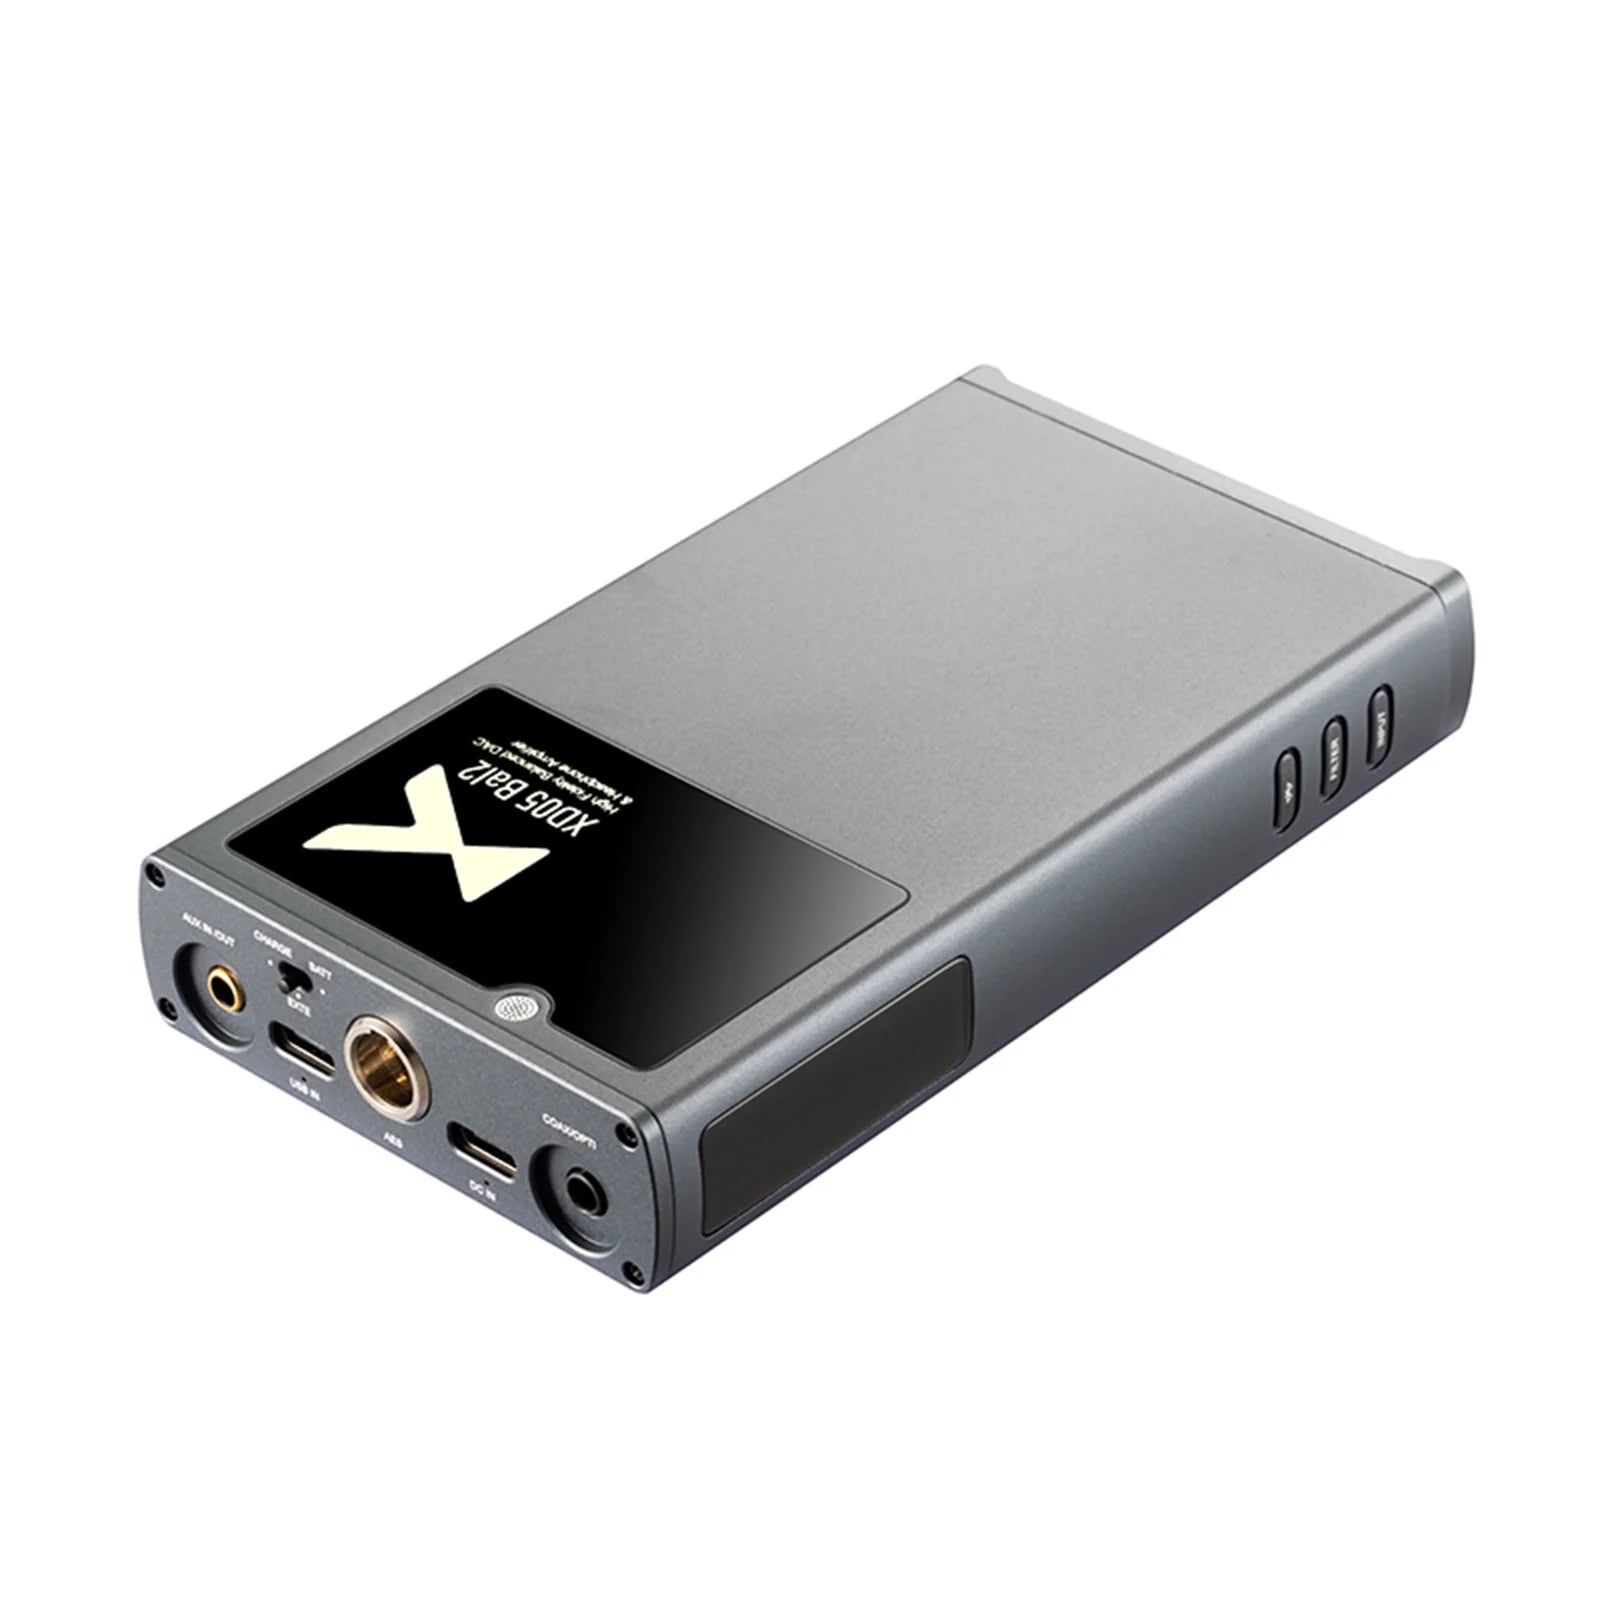 xDuoo XD05 Bal 2 Portable Wireless Balanced DAC & Headphone Amplifier